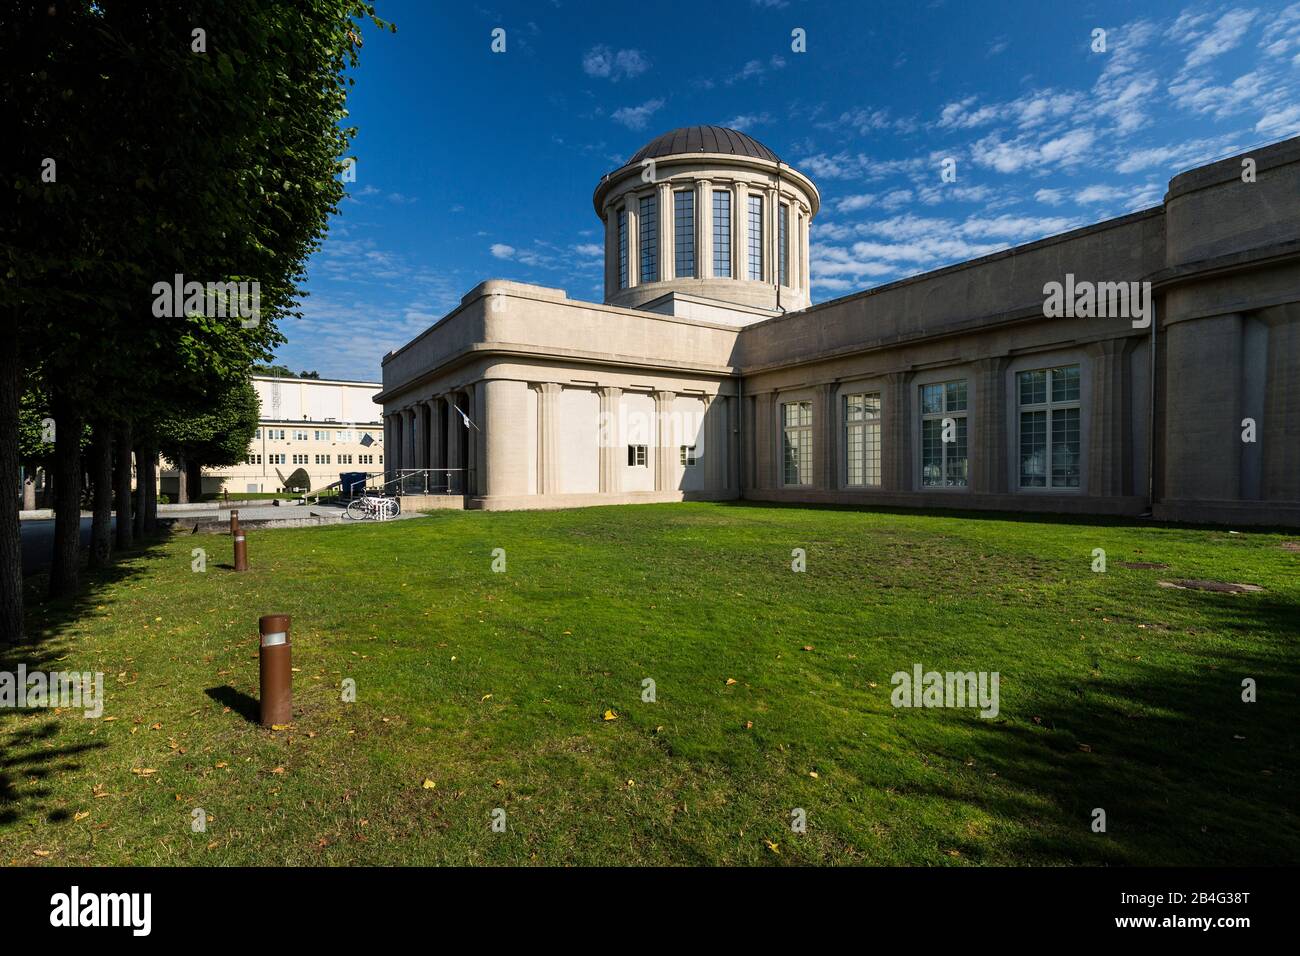 Europe, Poland, Lower Silesia, Wroclaw - Hala Stulecia / Centennial Hall - UNESCO World Heritage Site Stock Photo